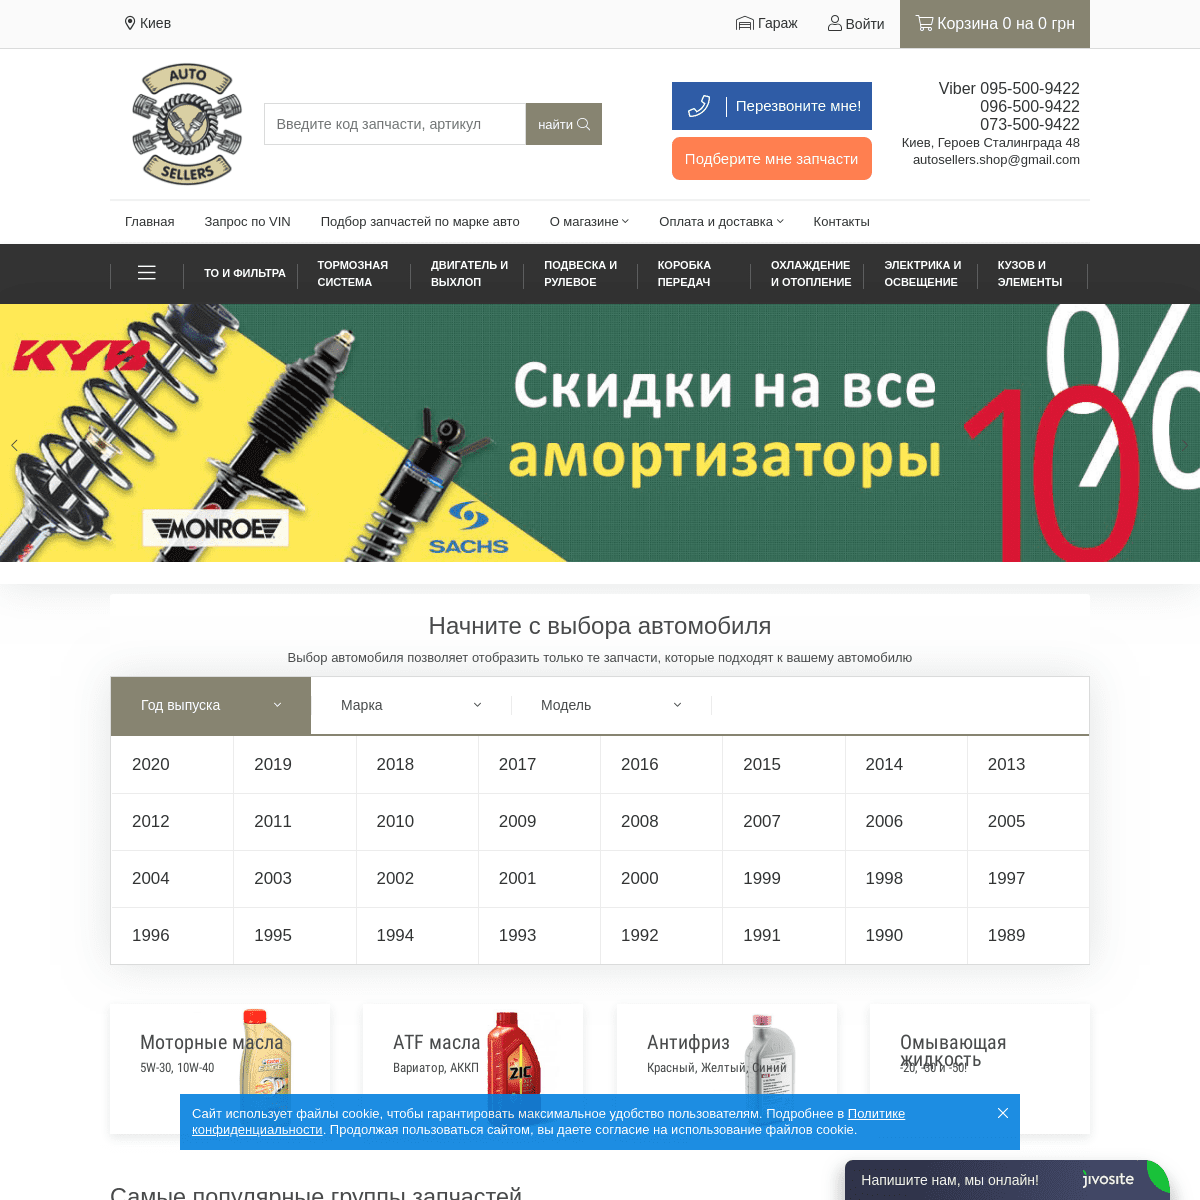 A complete backup of autosellers.com.ua